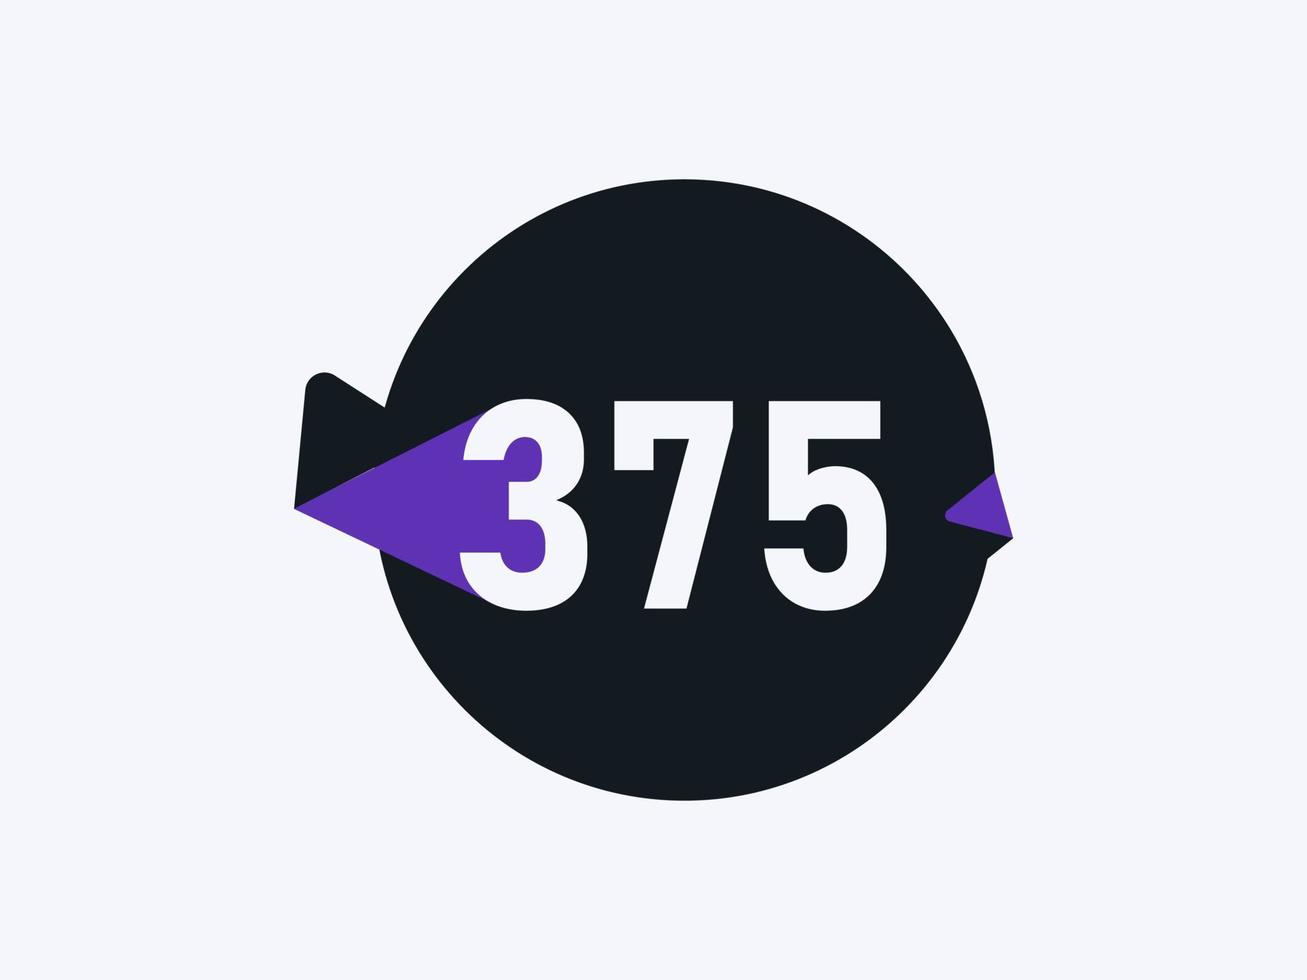 375 Number logo icon design vector image. Number logo icon design vector image